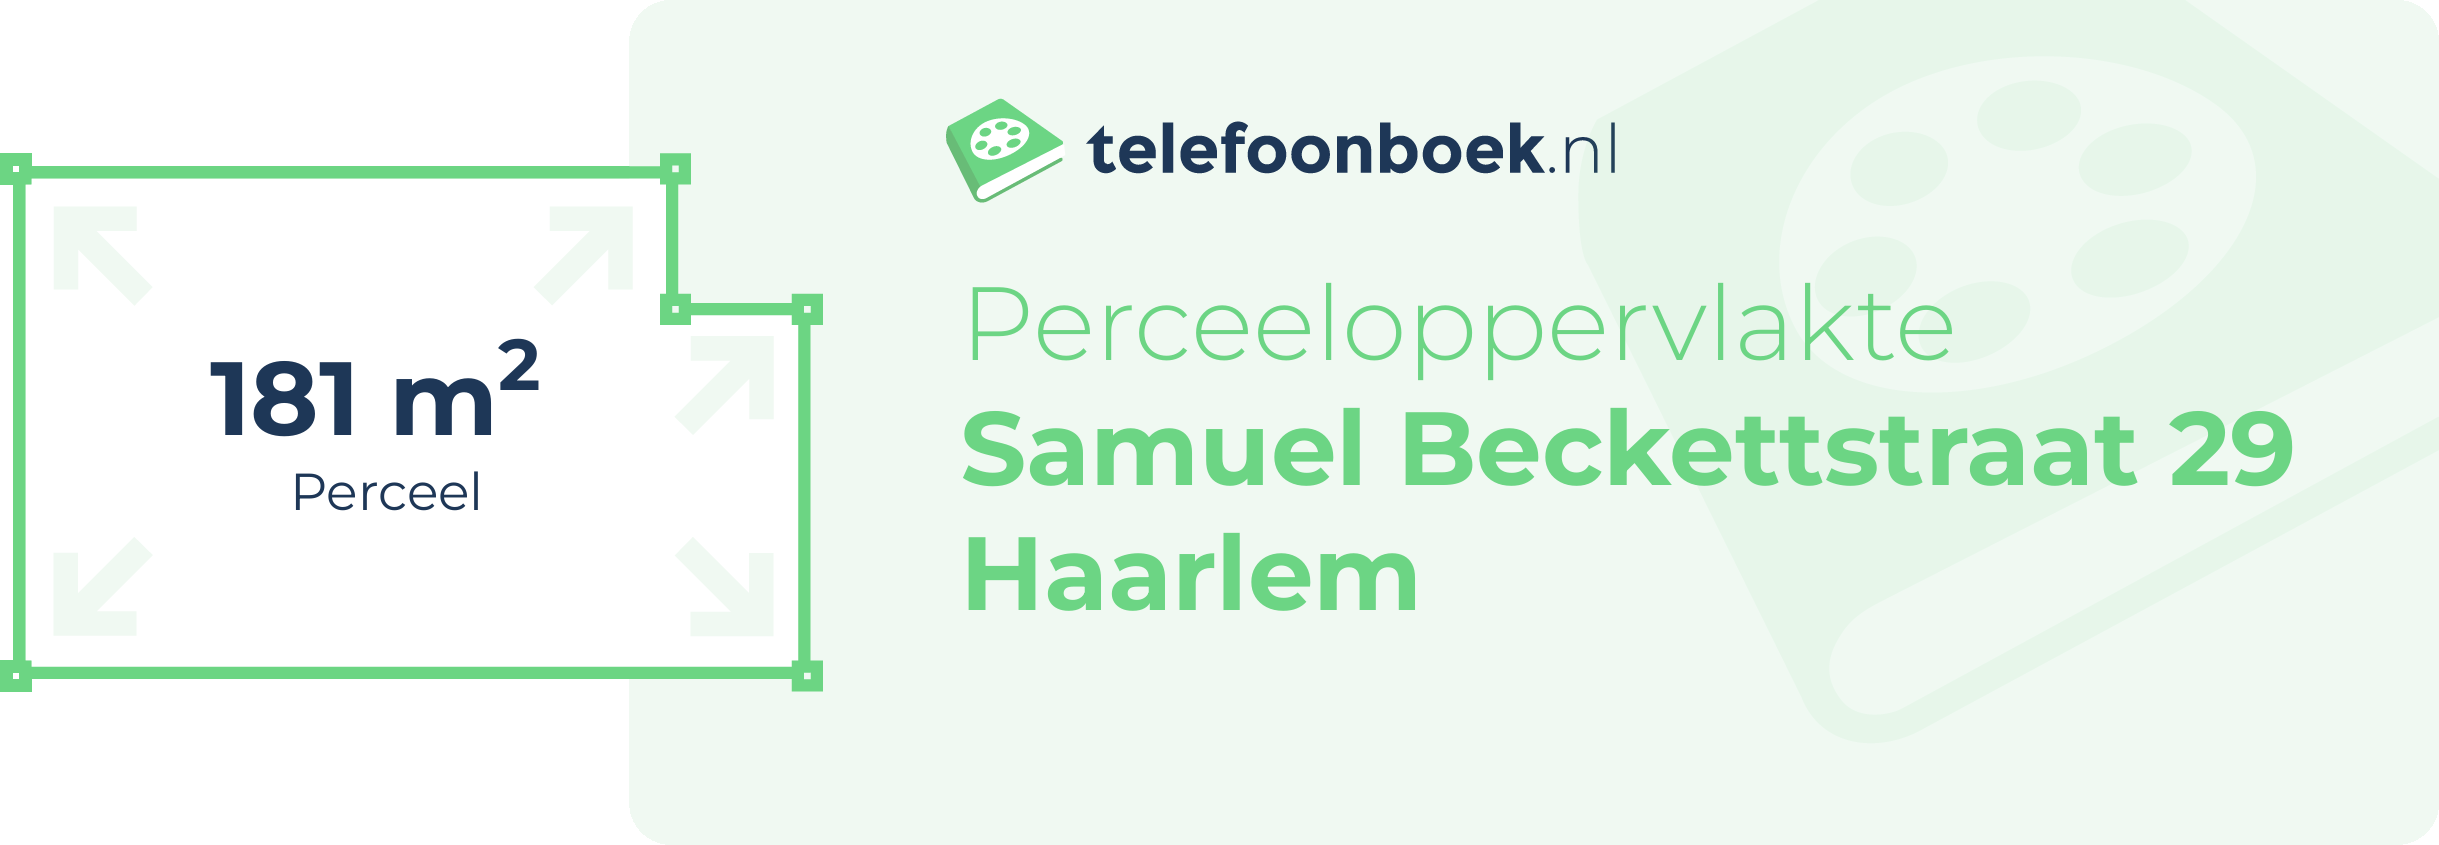 Perceeloppervlakte Samuel Beckettstraat 29 Haarlem